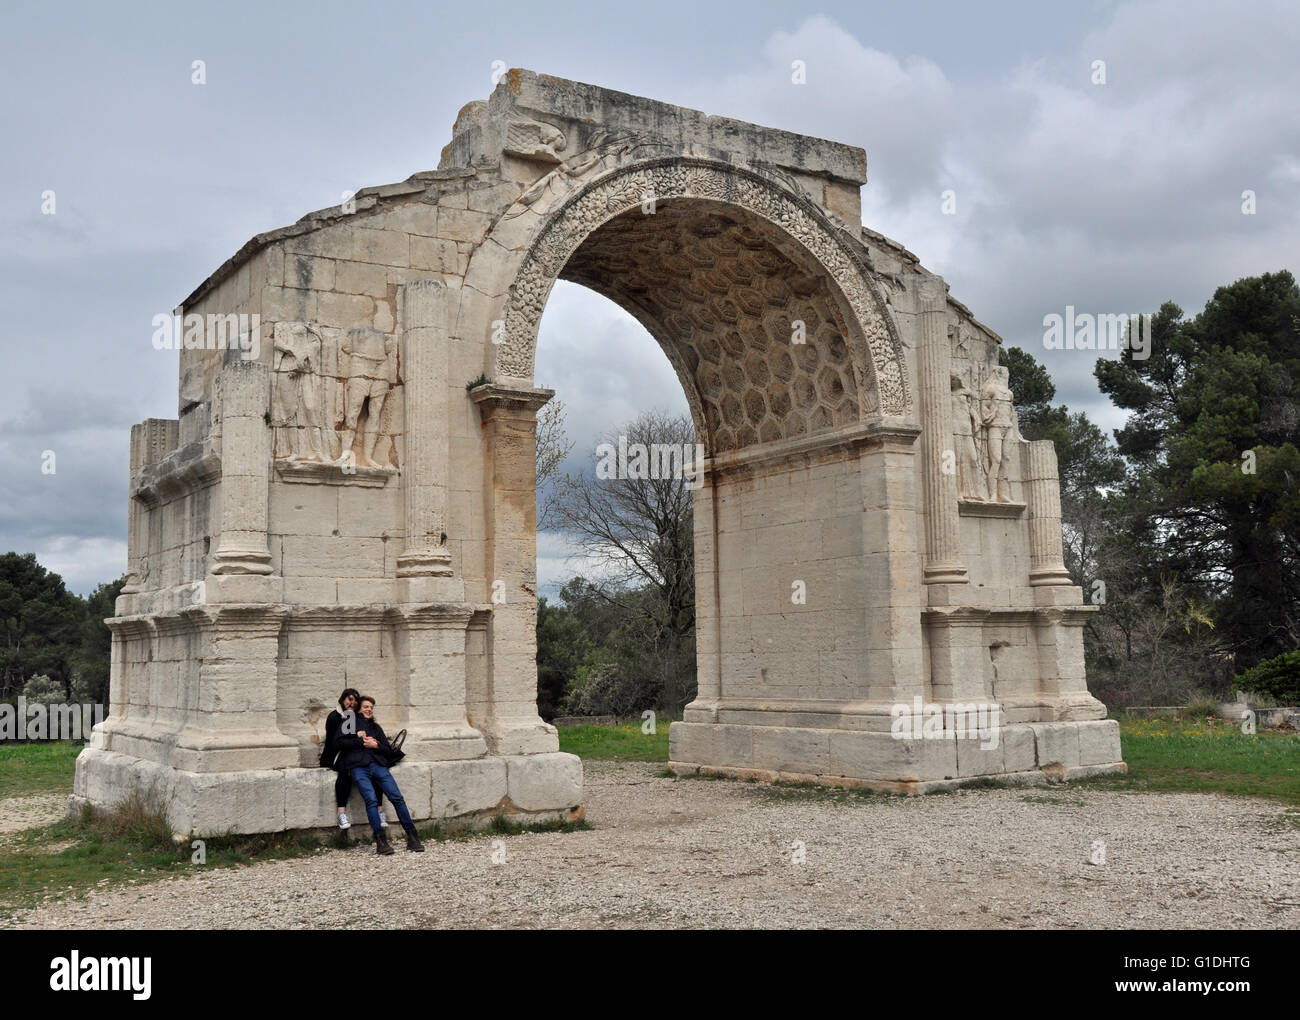 The arch of triumph, Les Antiques, Glanum, Provence, France. Stock Photo